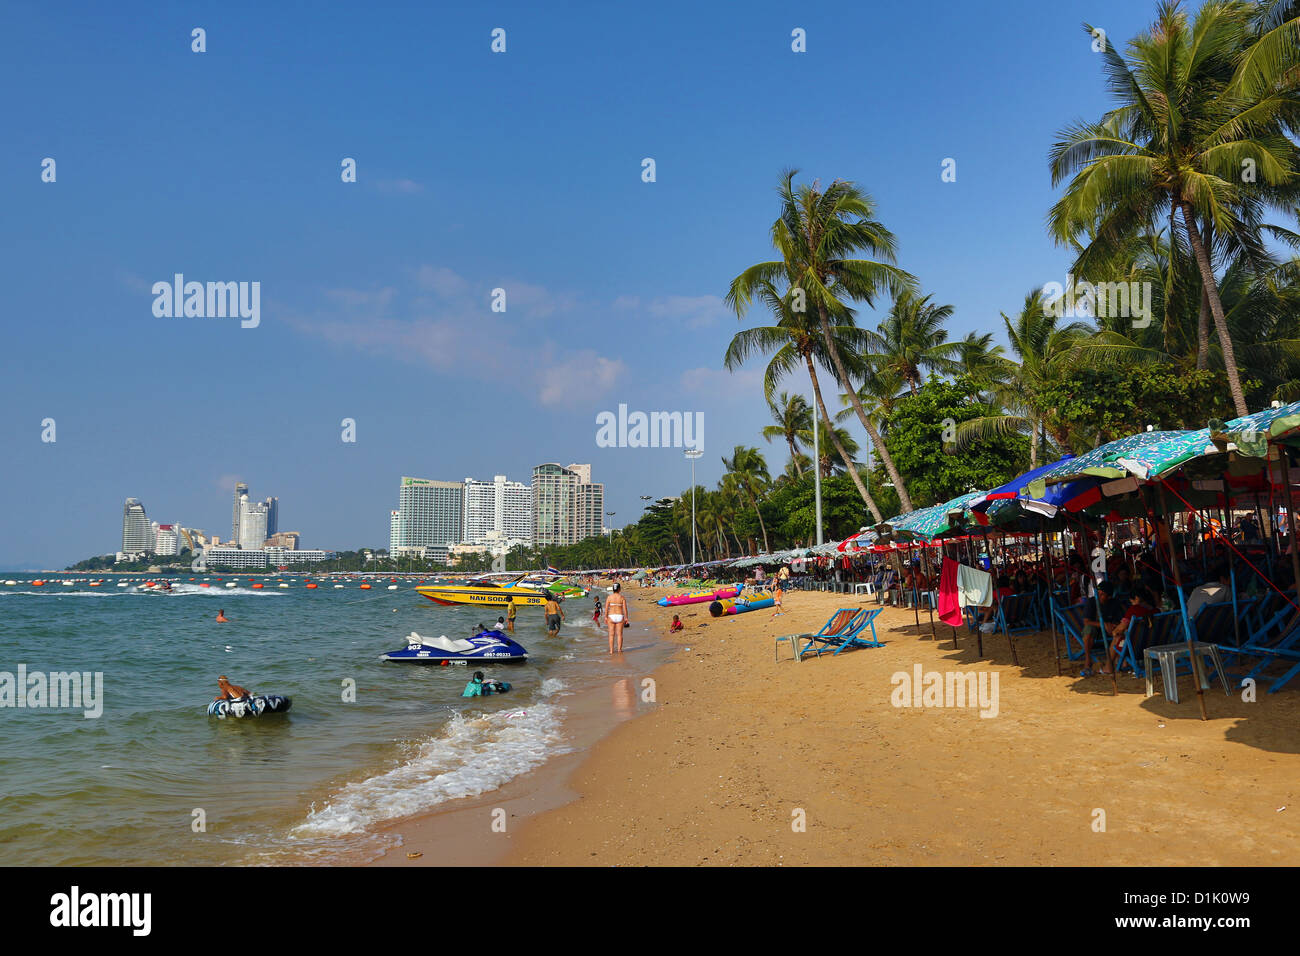 Beach scene on the seafront of Pattaya, Thailand Stock Photo